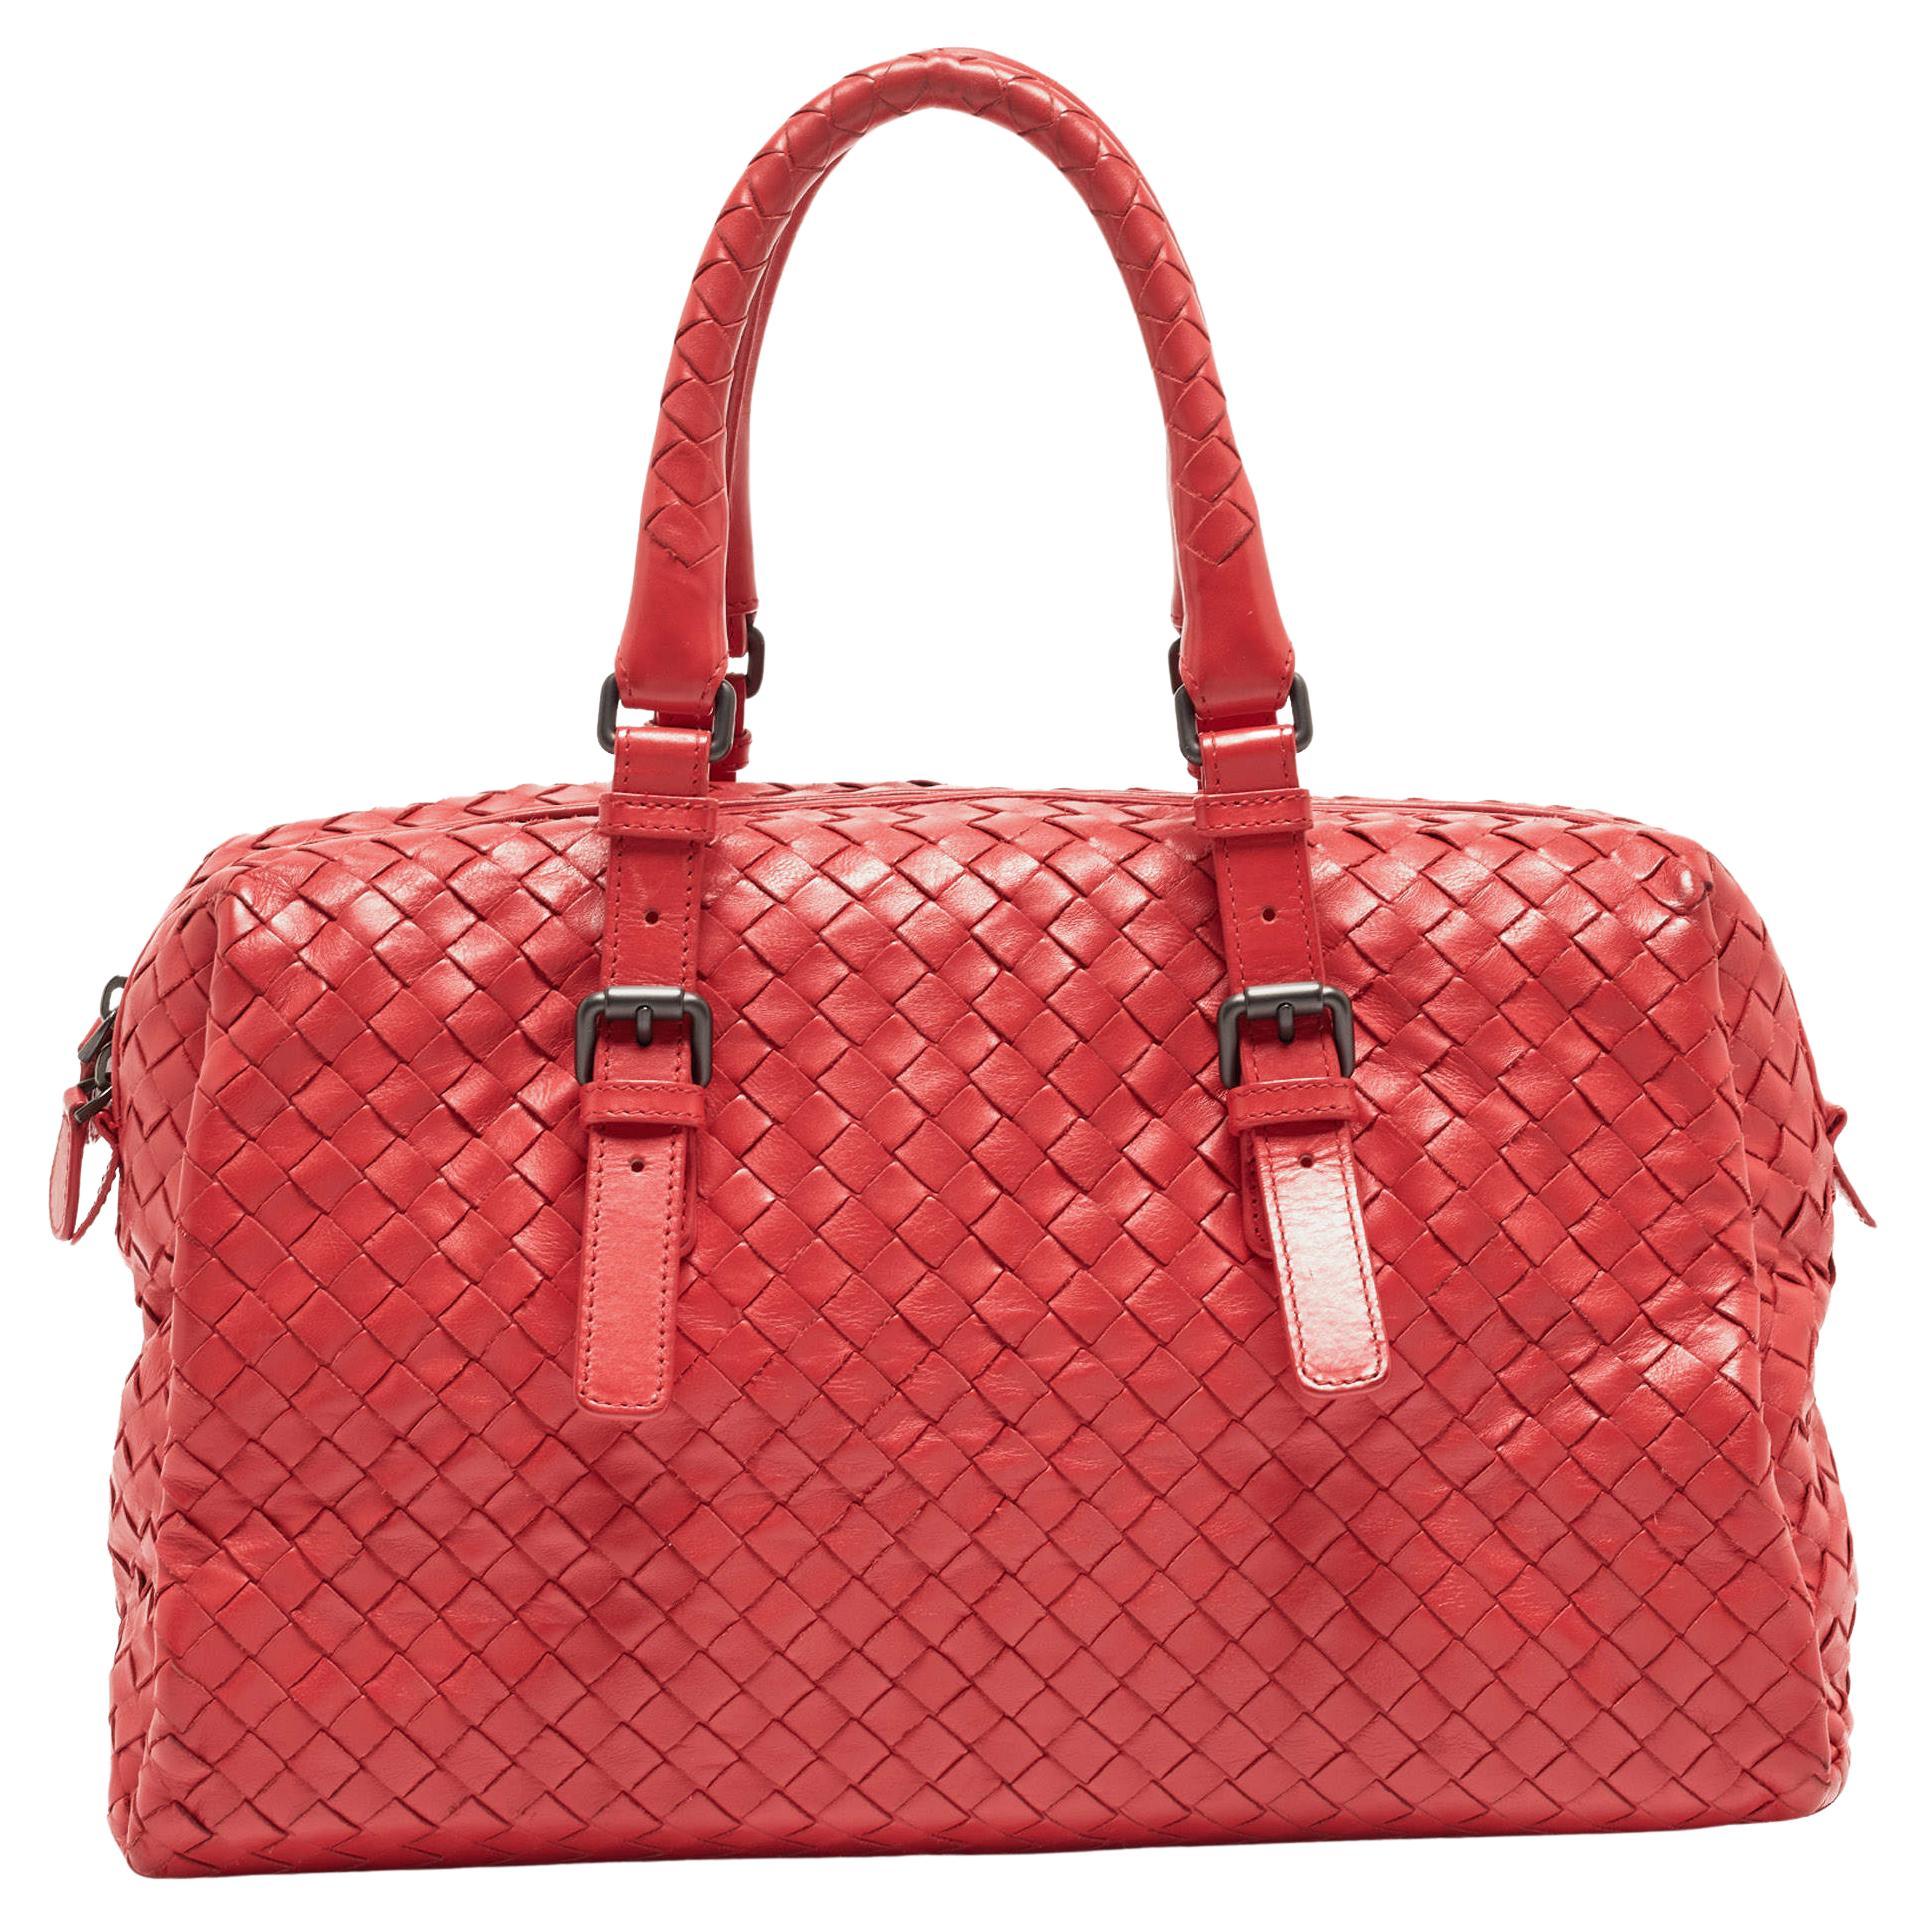 Bottega Veneta Red Intrecciato Leather New Boston Bag For Sale